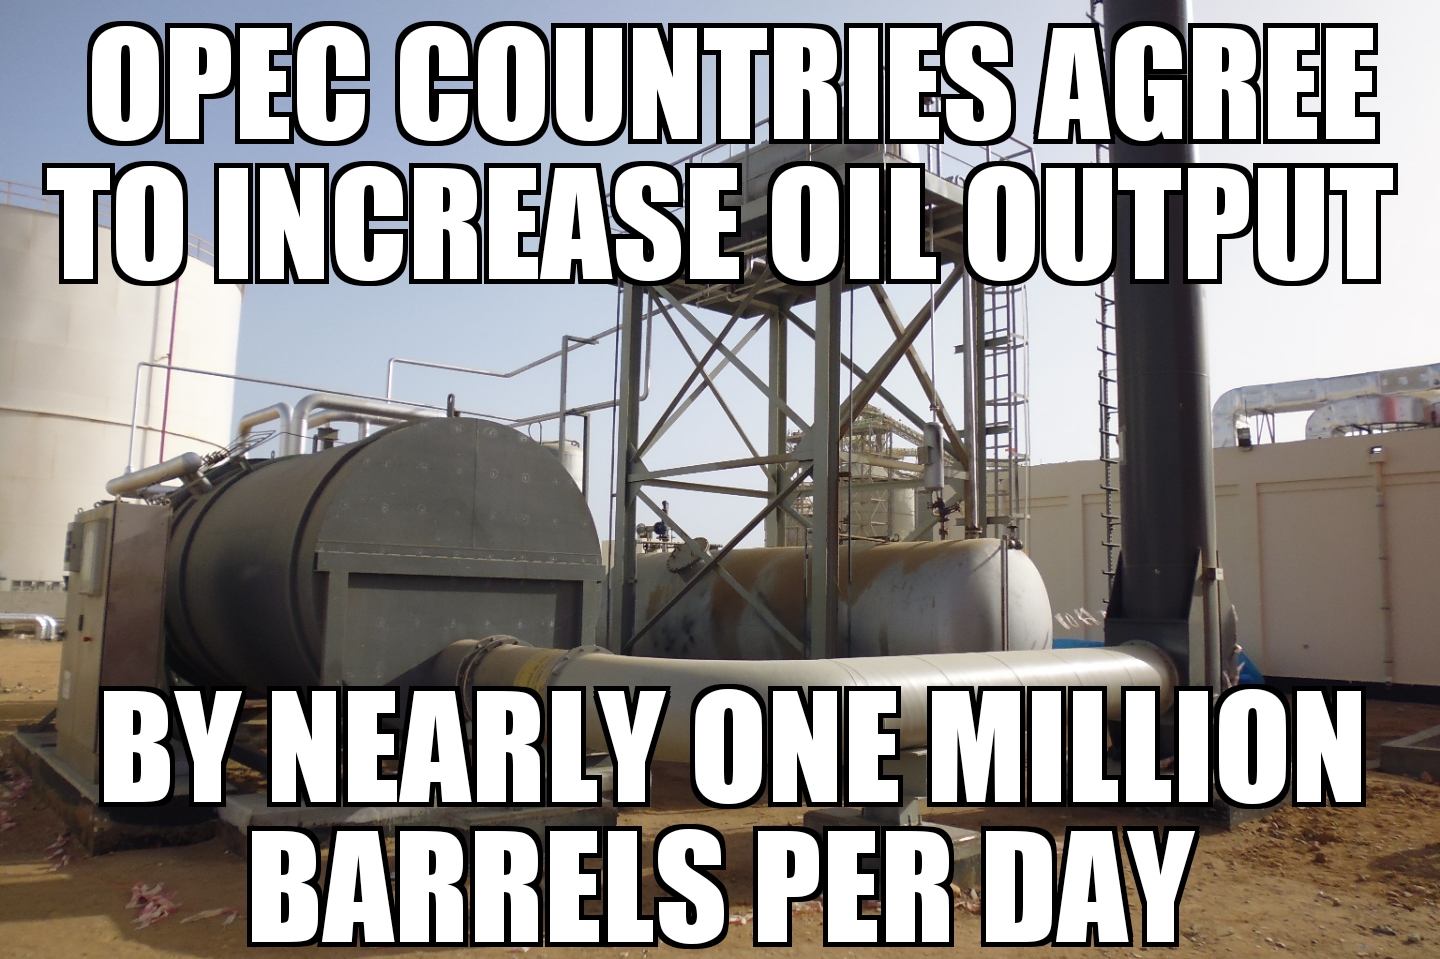 OPEC agrees to million barrel per day oil increase